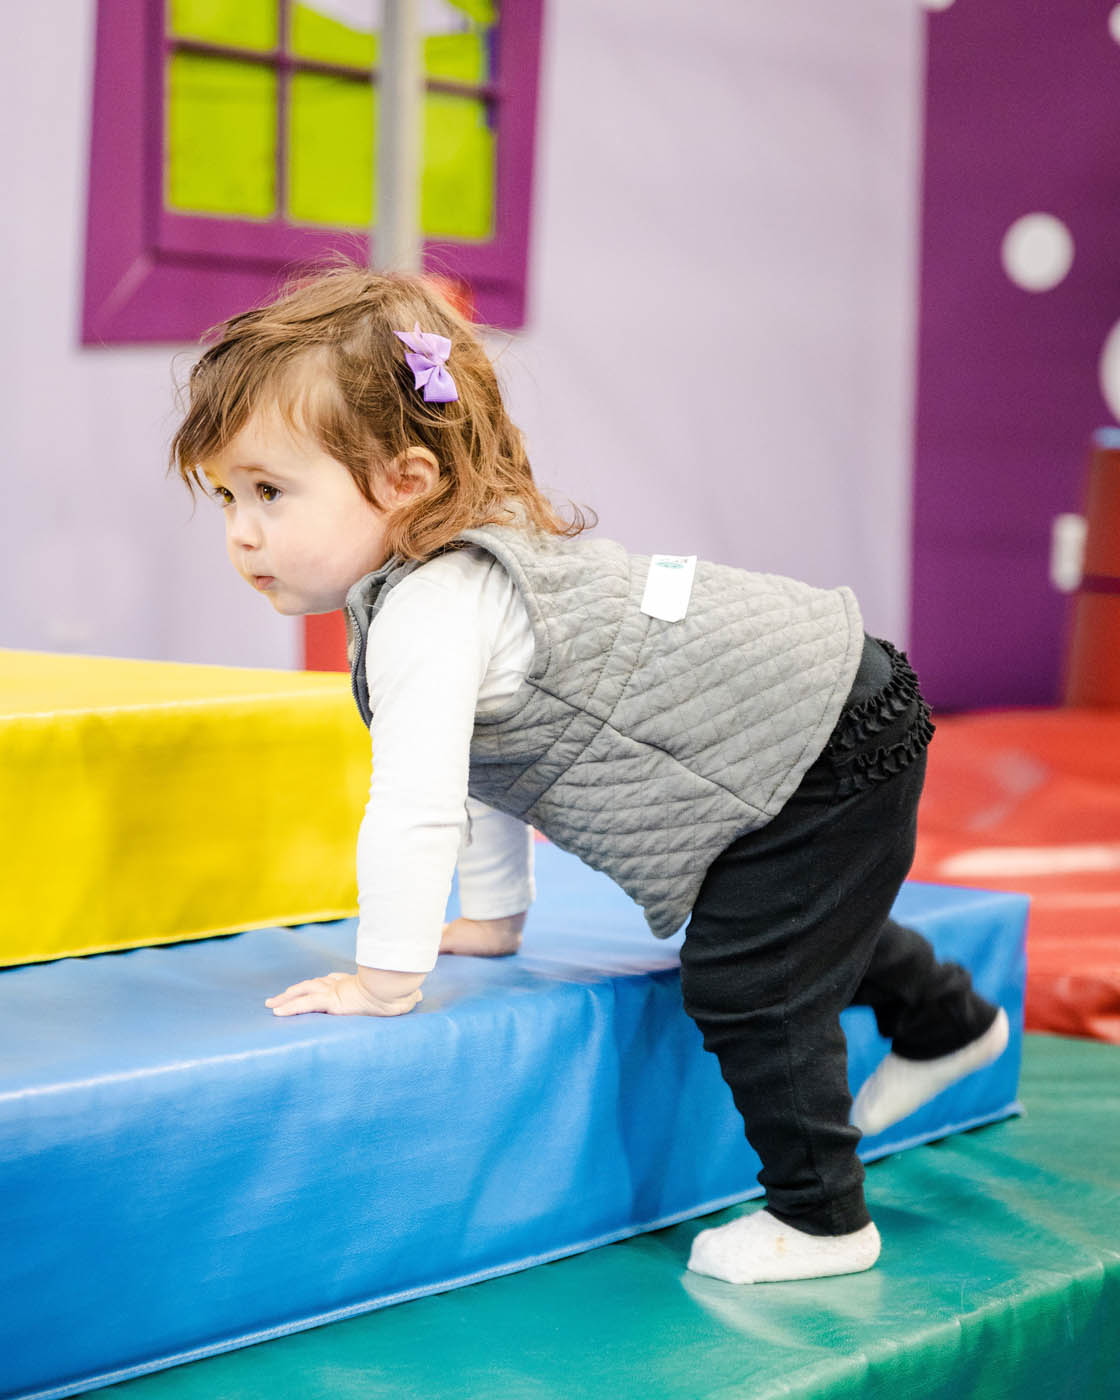 A little girl climbing on soft tumbling equipment for toddlers at Romp n' Roll in Glen Allen, VA.